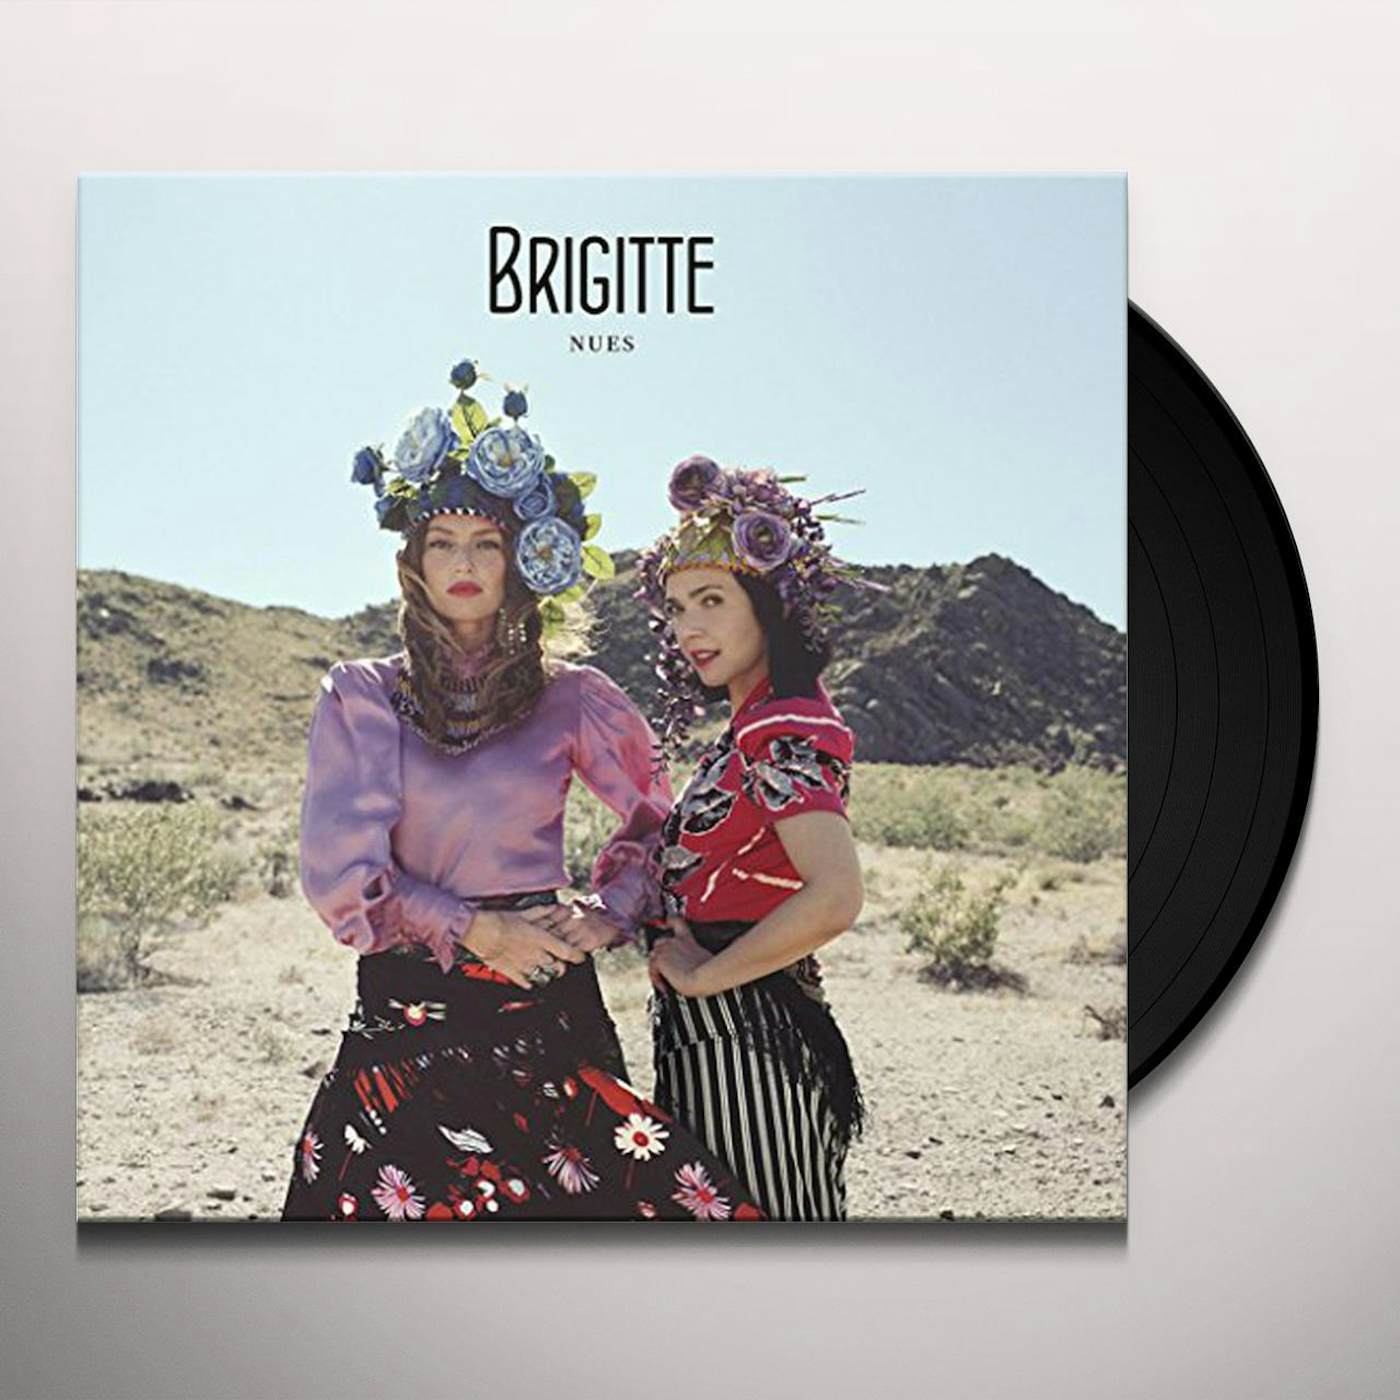 Brigitte Nues Vinyl Record